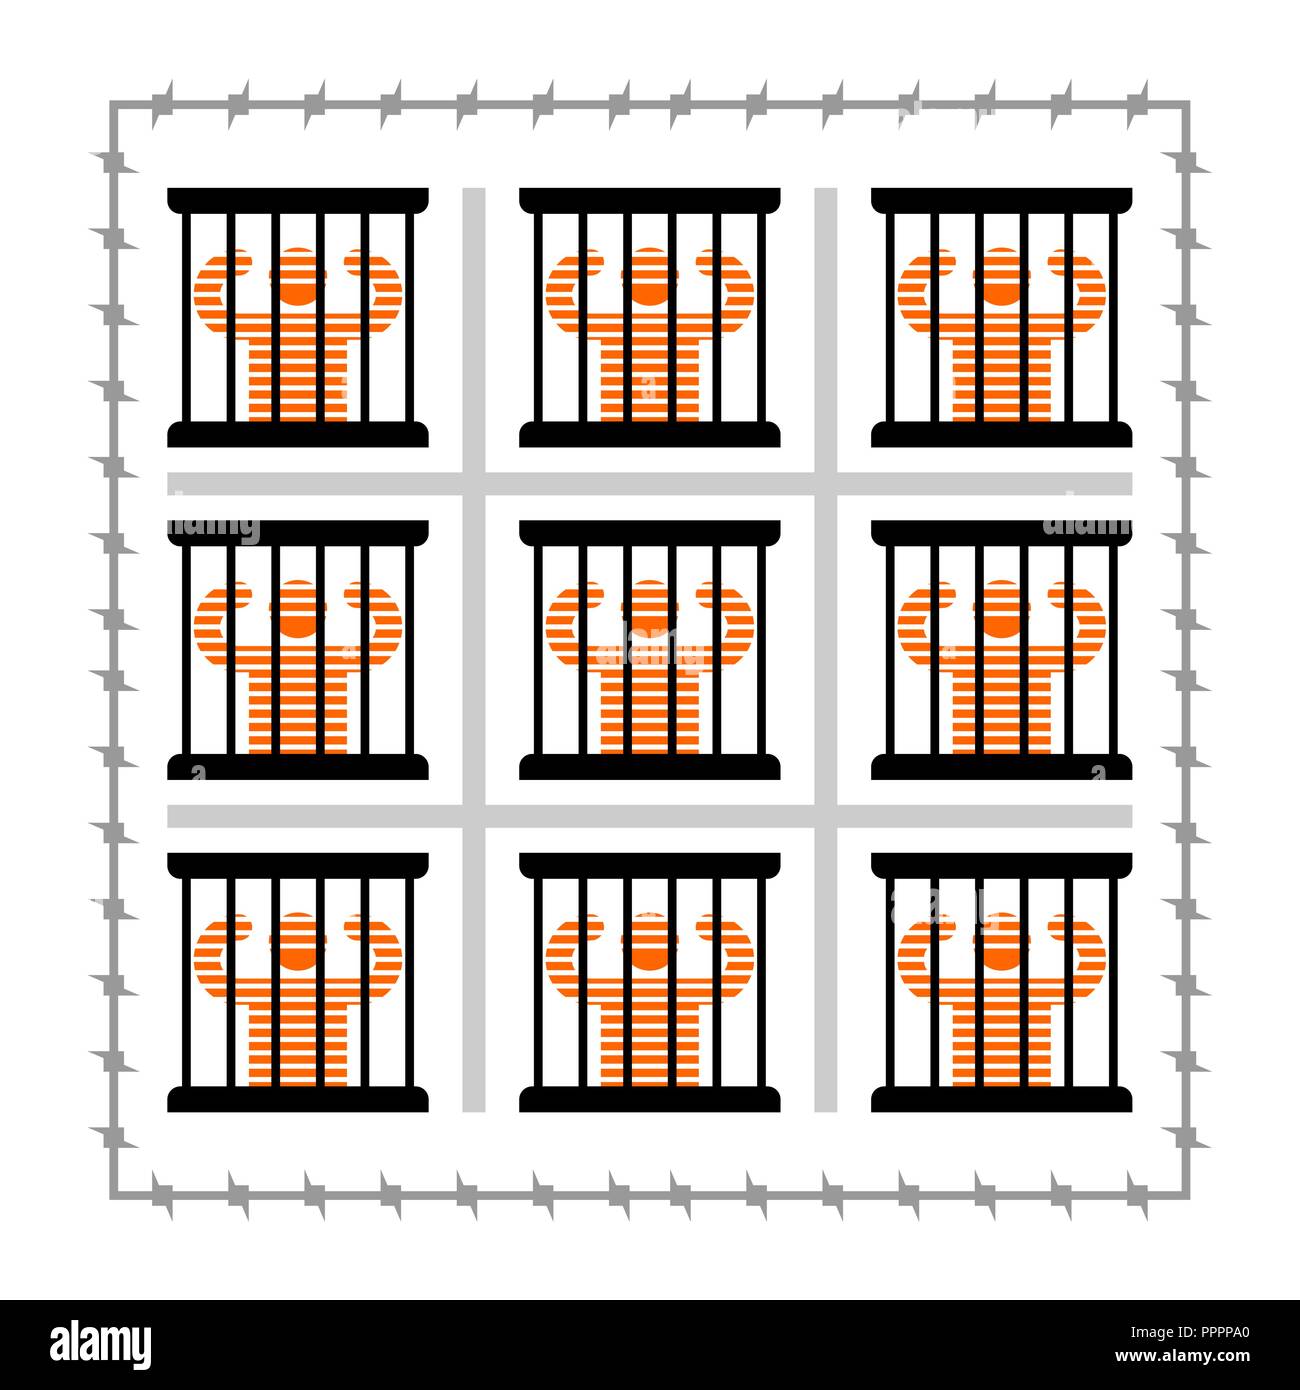 Jail symbol. Prisoner in prison. Perpetrator and bars on windows. Barbed wire around perimeter Stock Vector